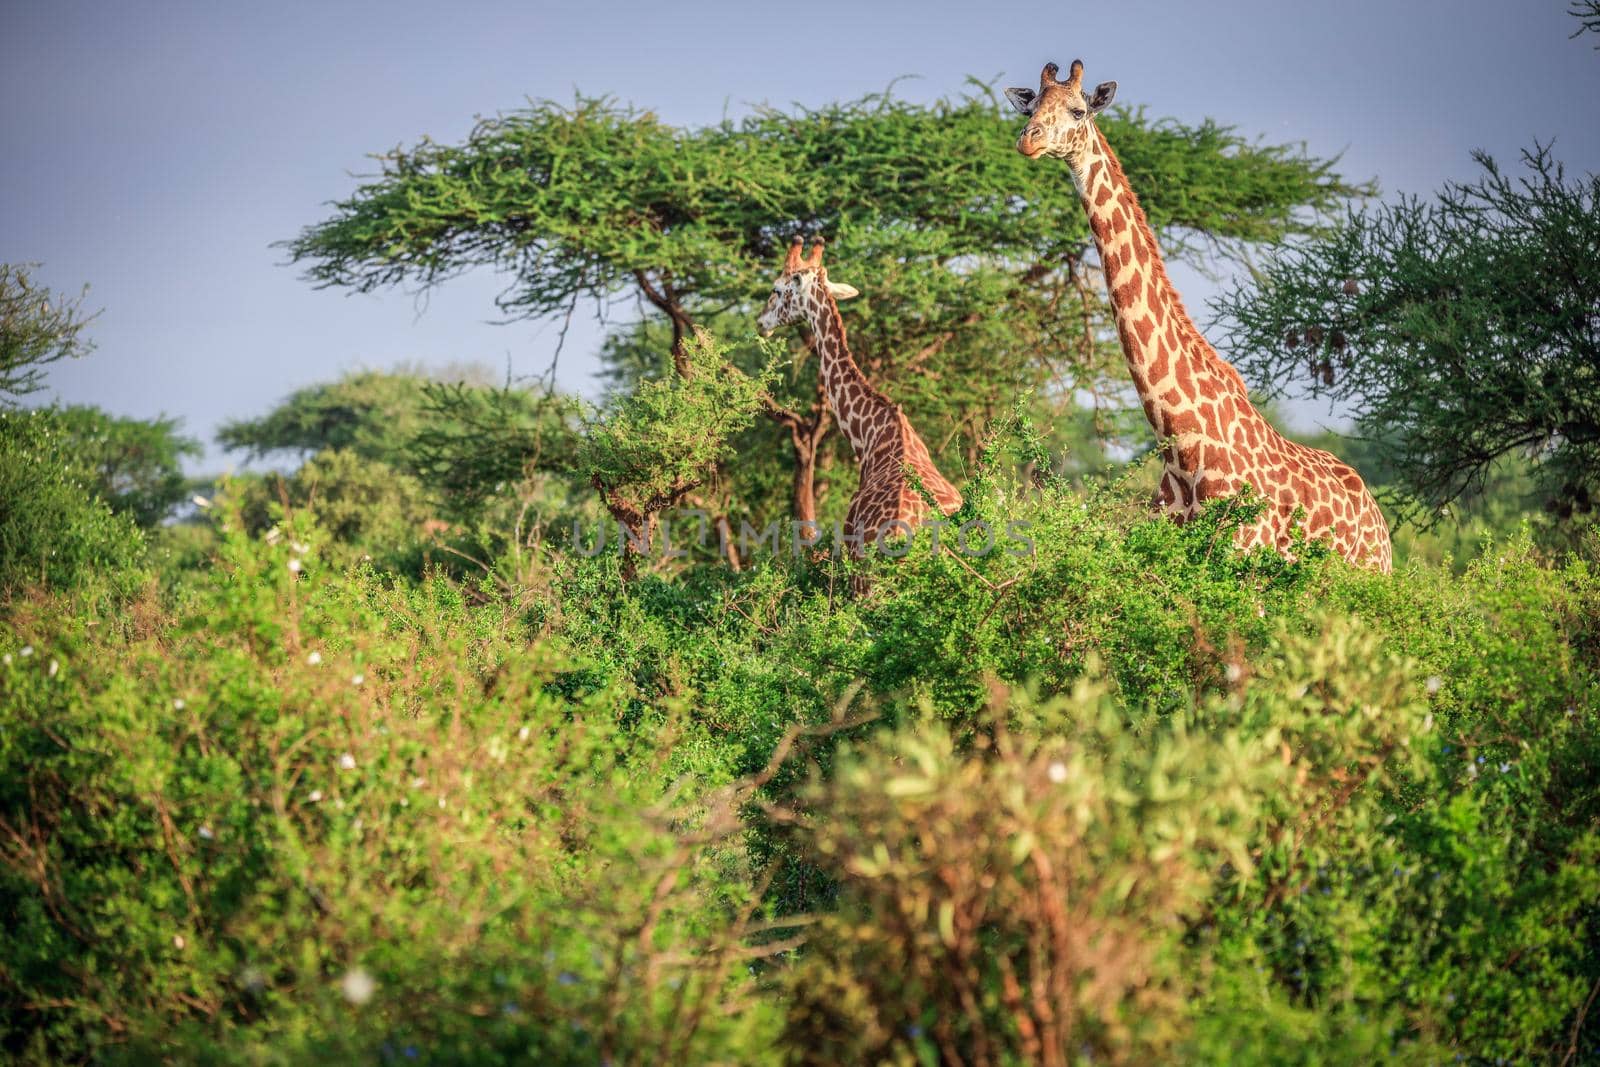 Masai Giraffe in Tsavo East Nationalpark, Kenya, Africa by Weltblick